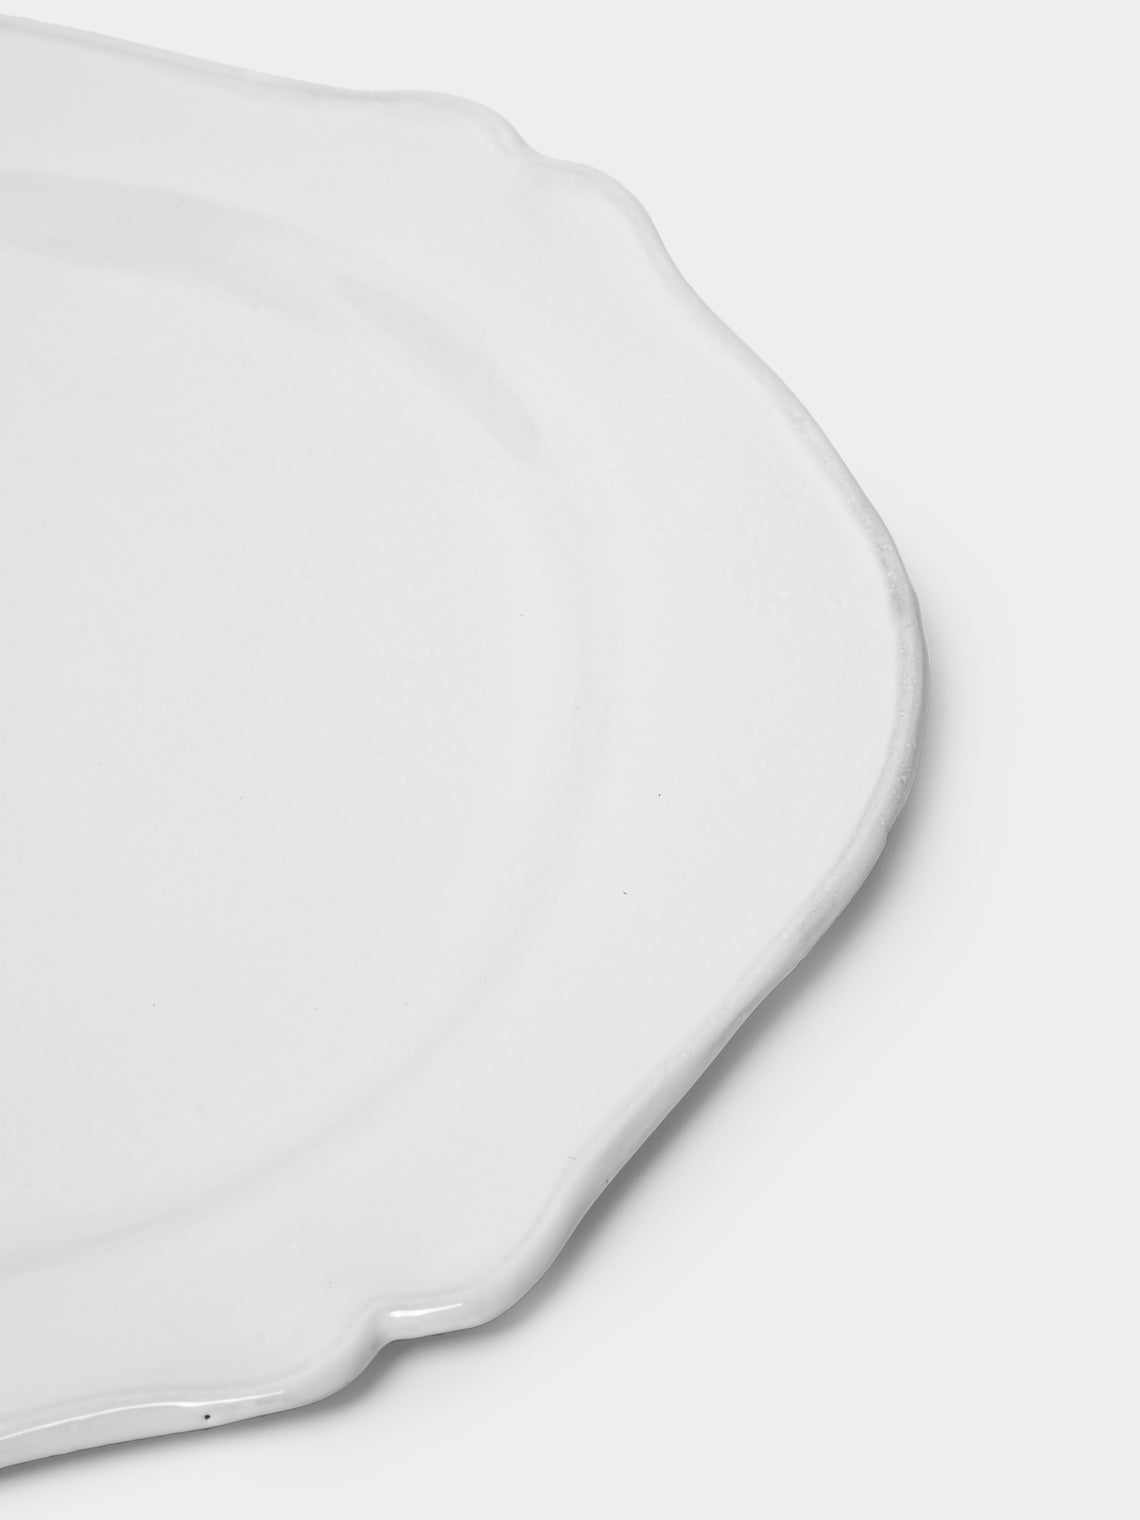 Astier de Villatte - Bac Dinner Plate -  - ABASK